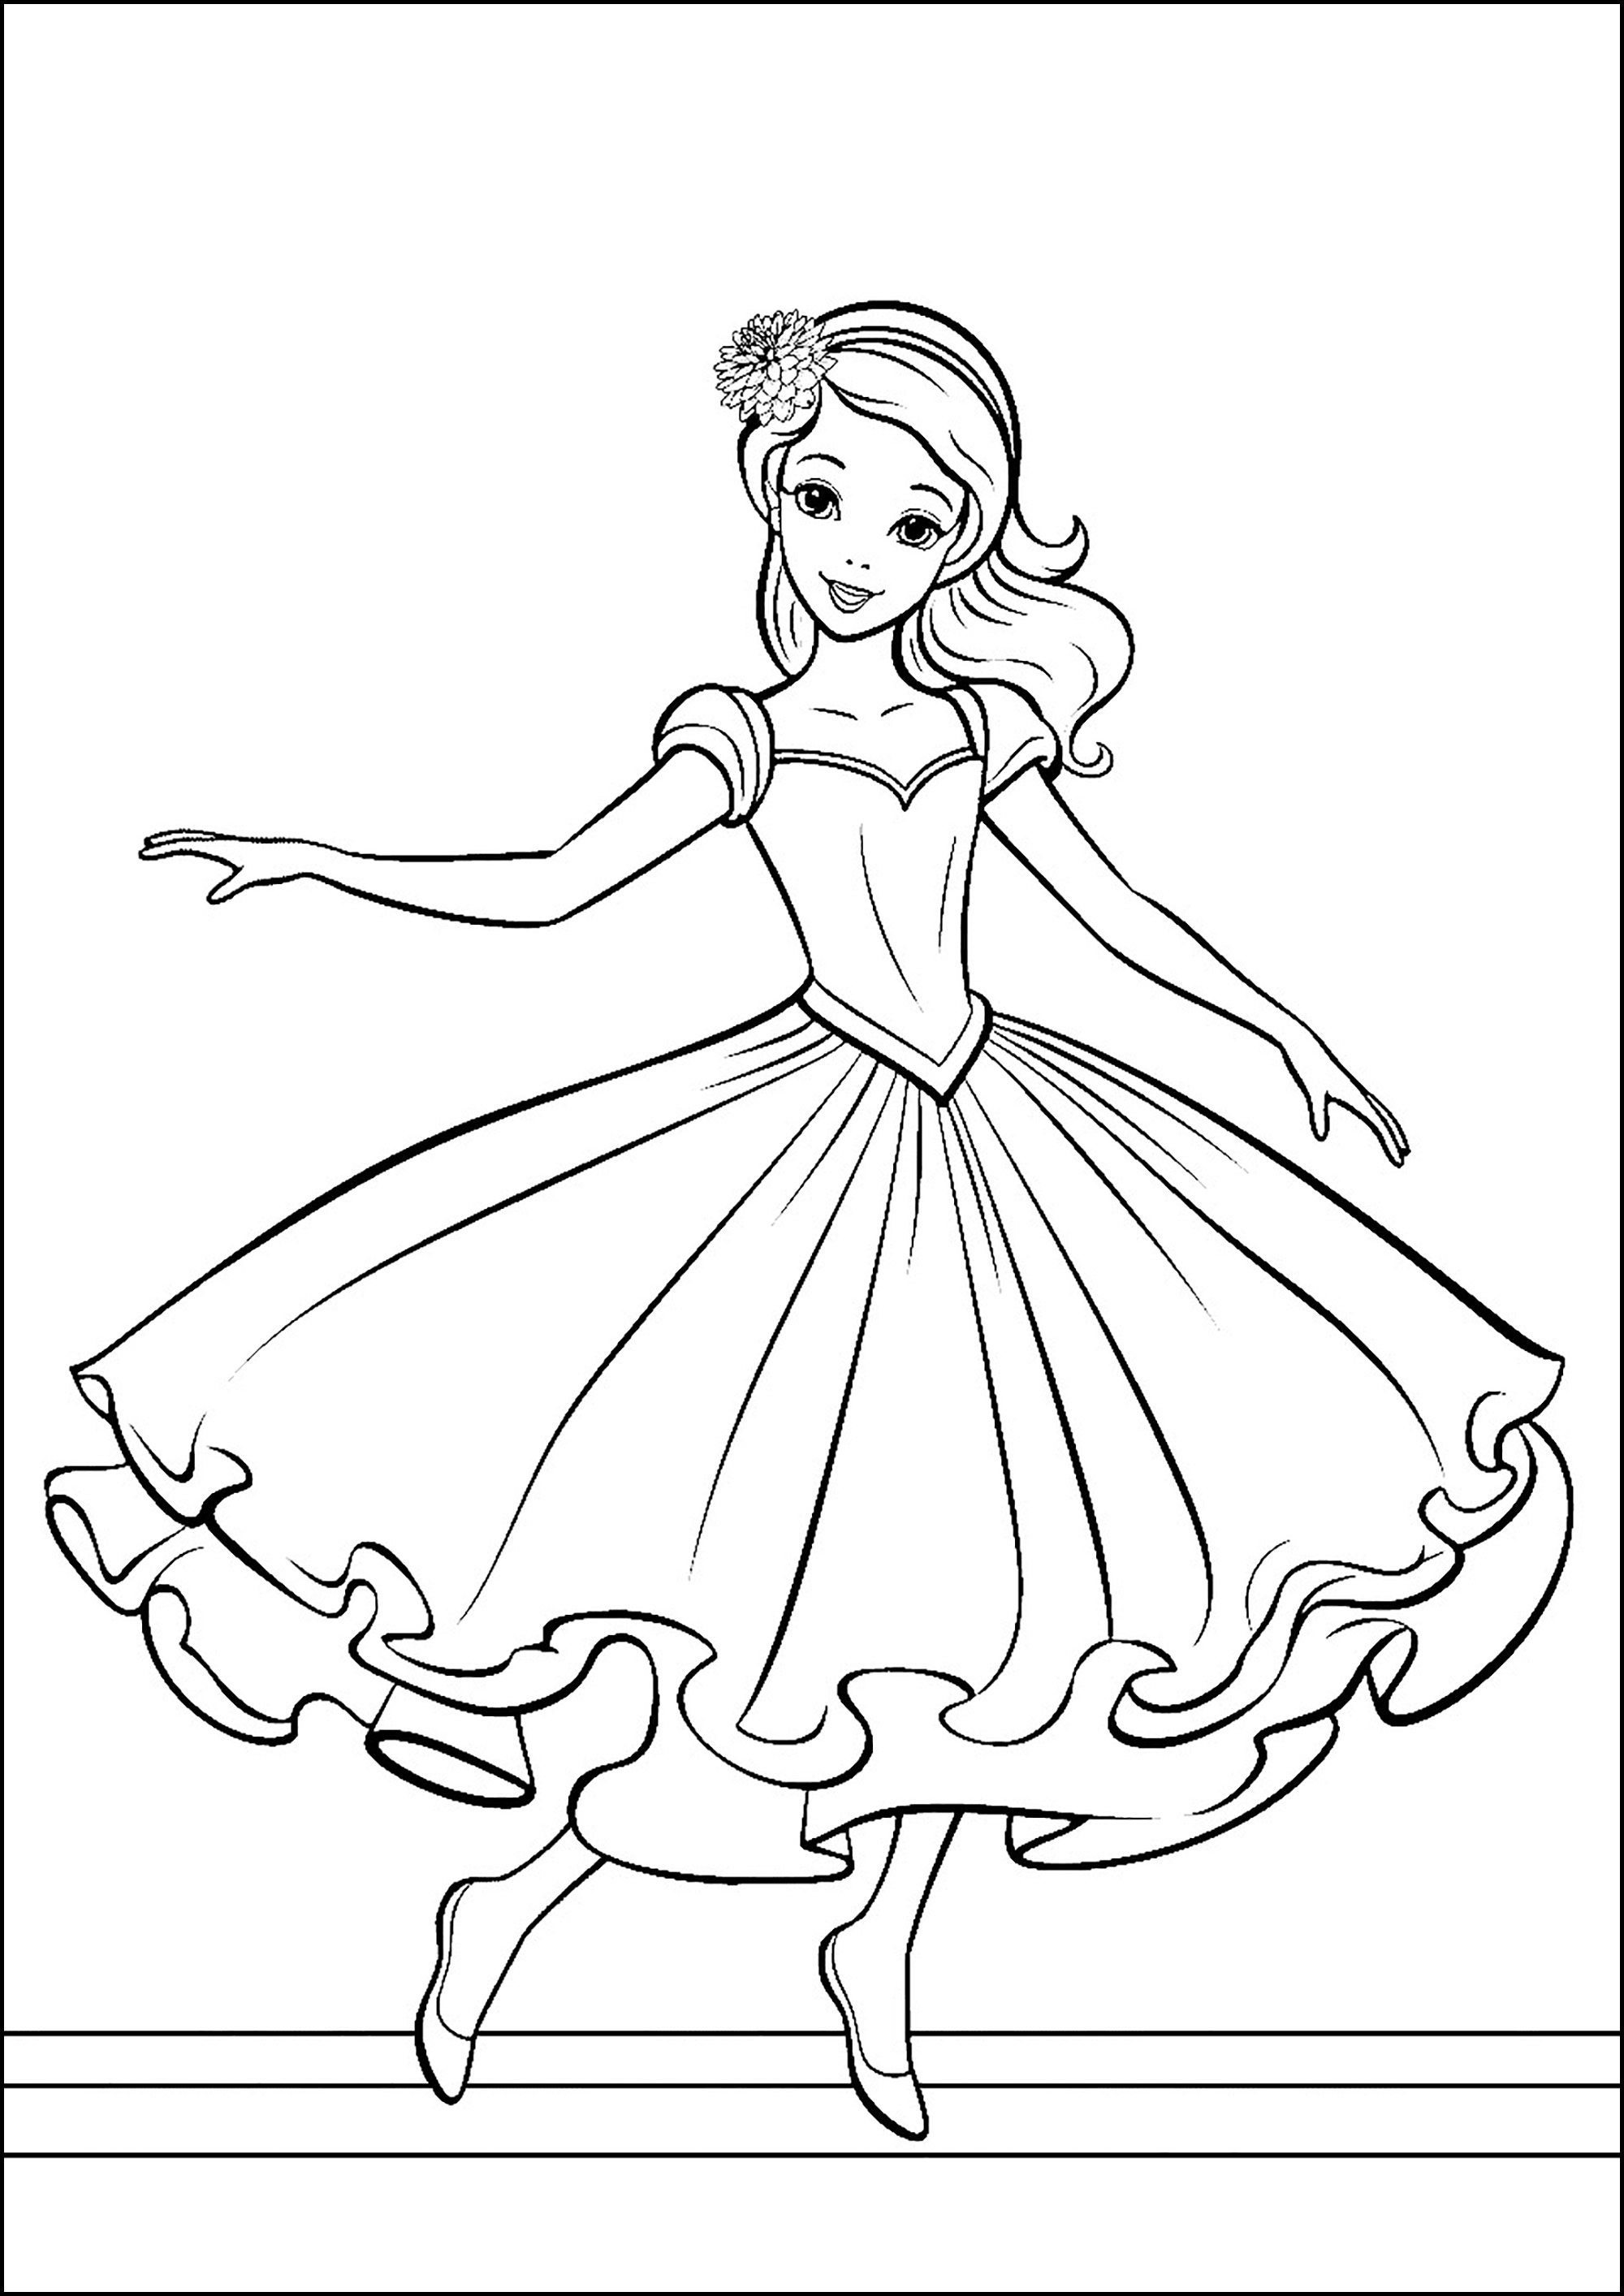 Magnificent ballerina dancer in a large dress